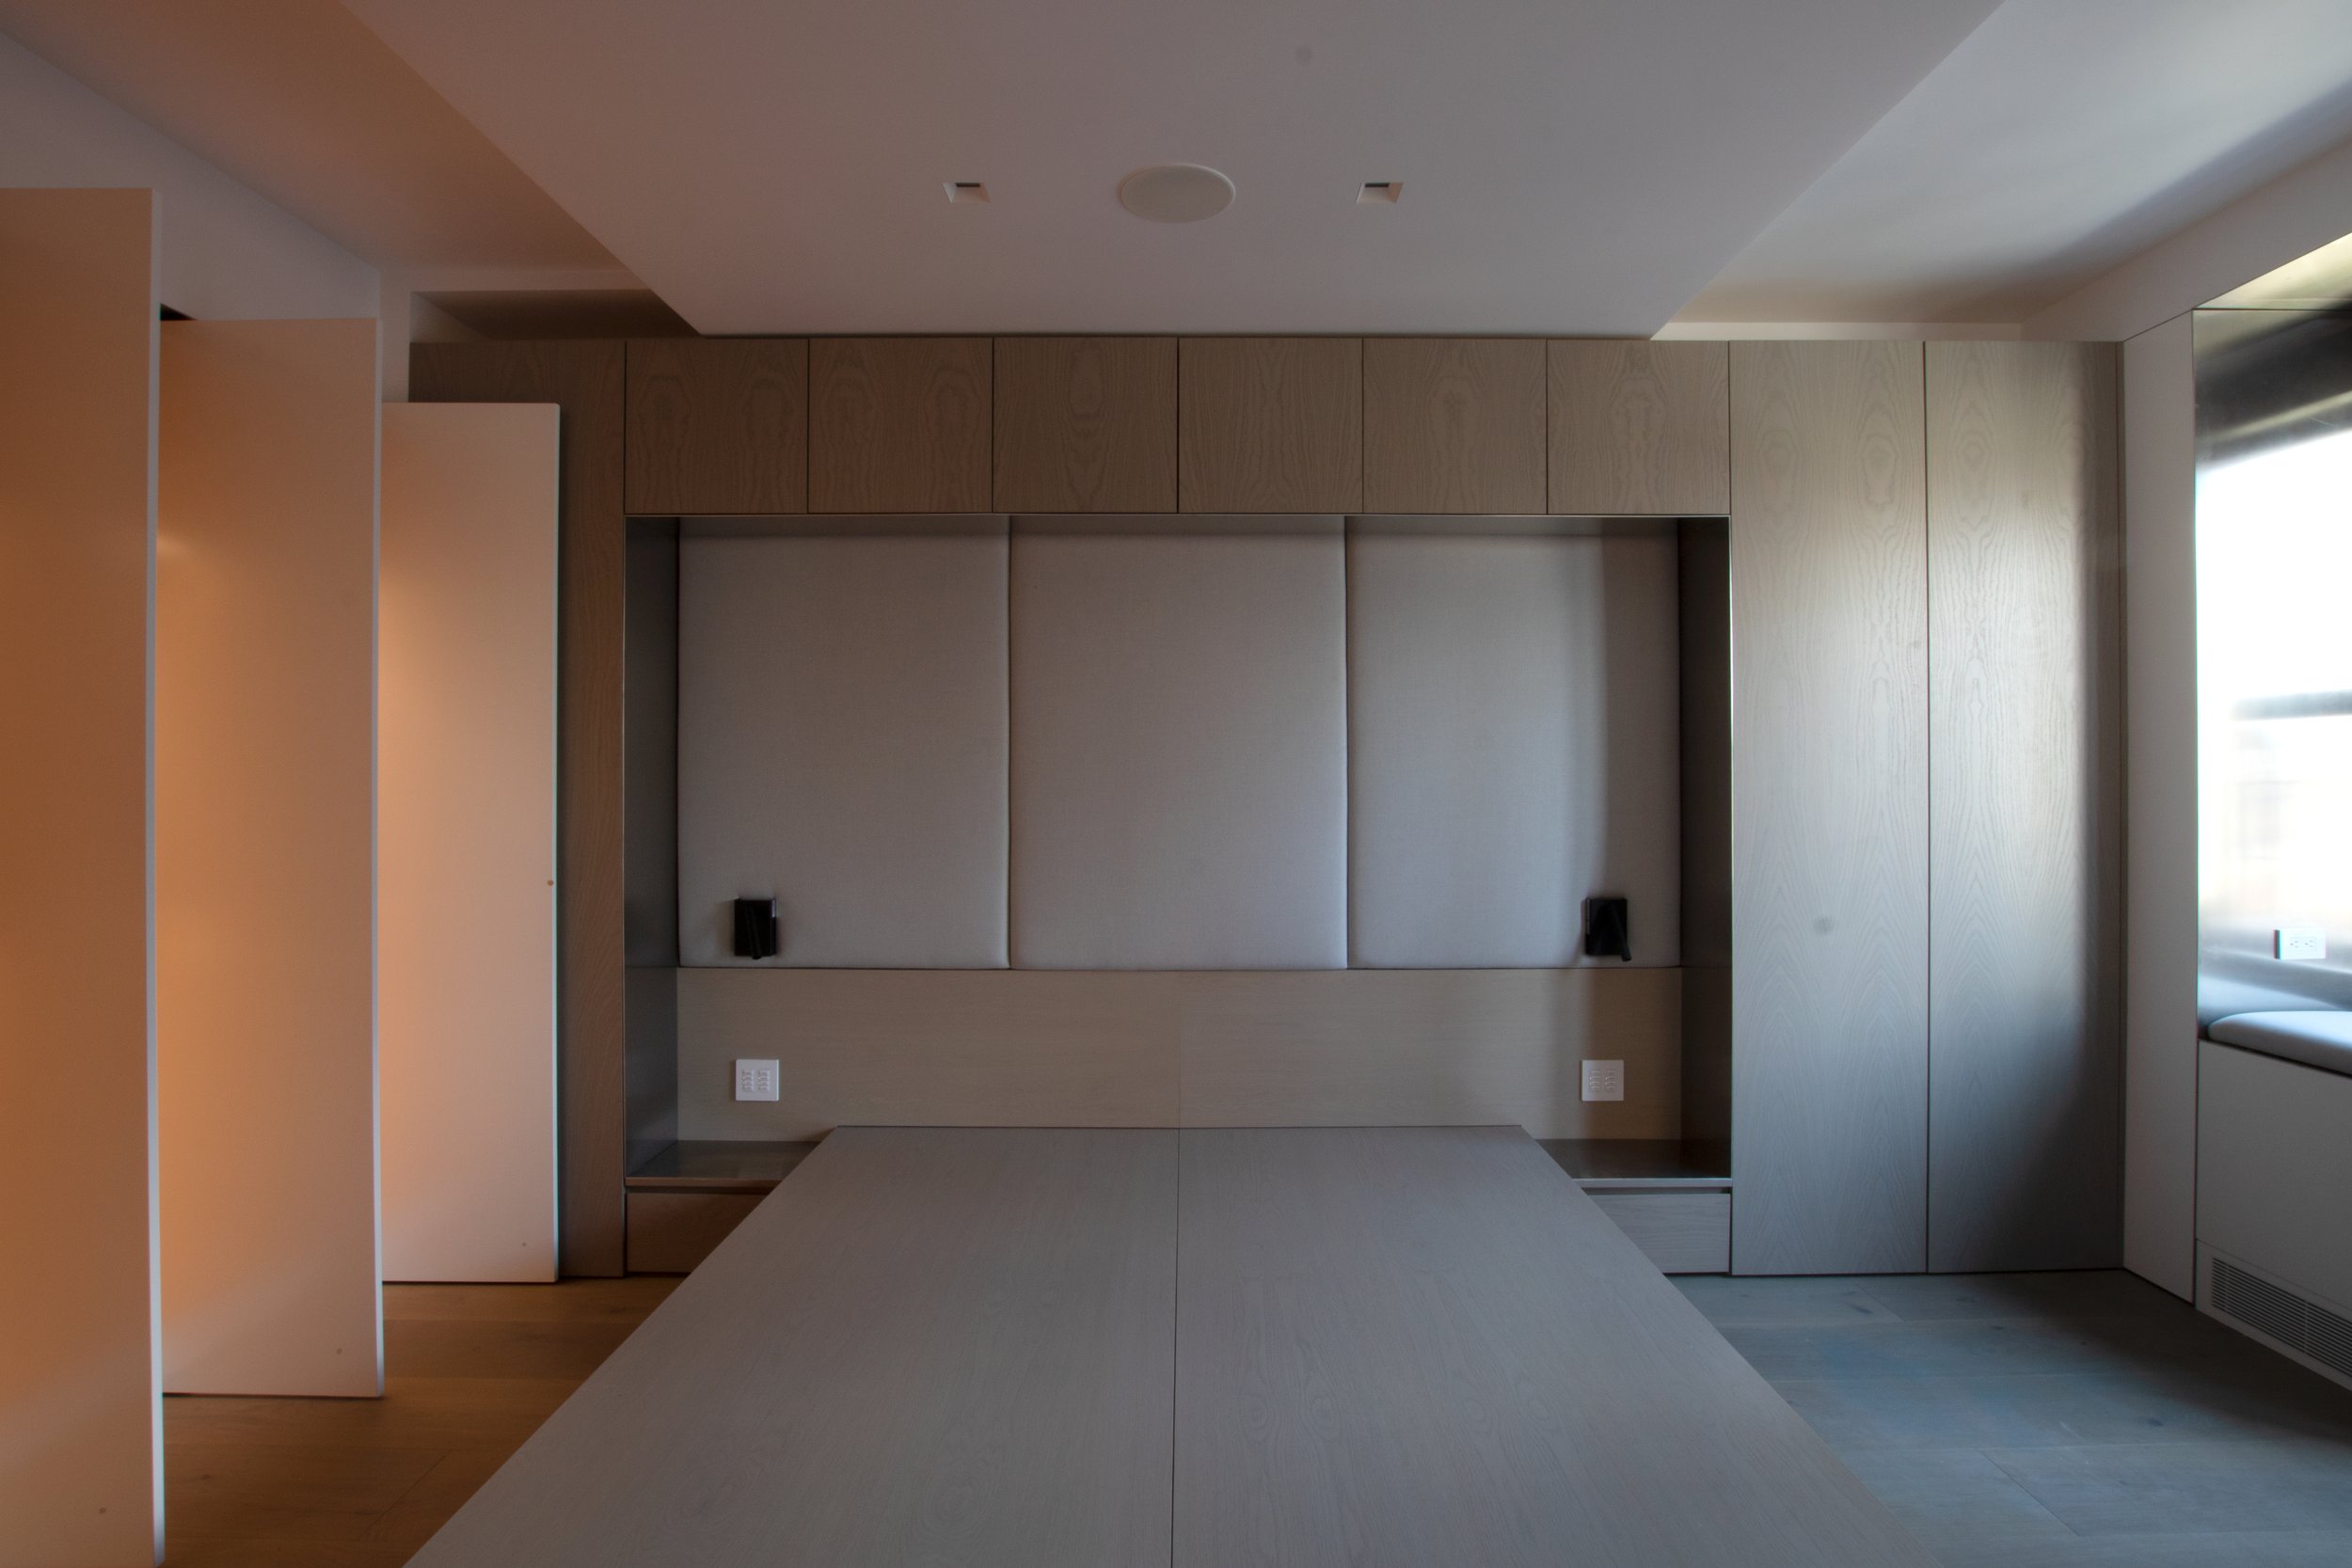 res4-resolution-4-architecture-park-avenue-apartment-interior-millwork-master-bedroom.jpg